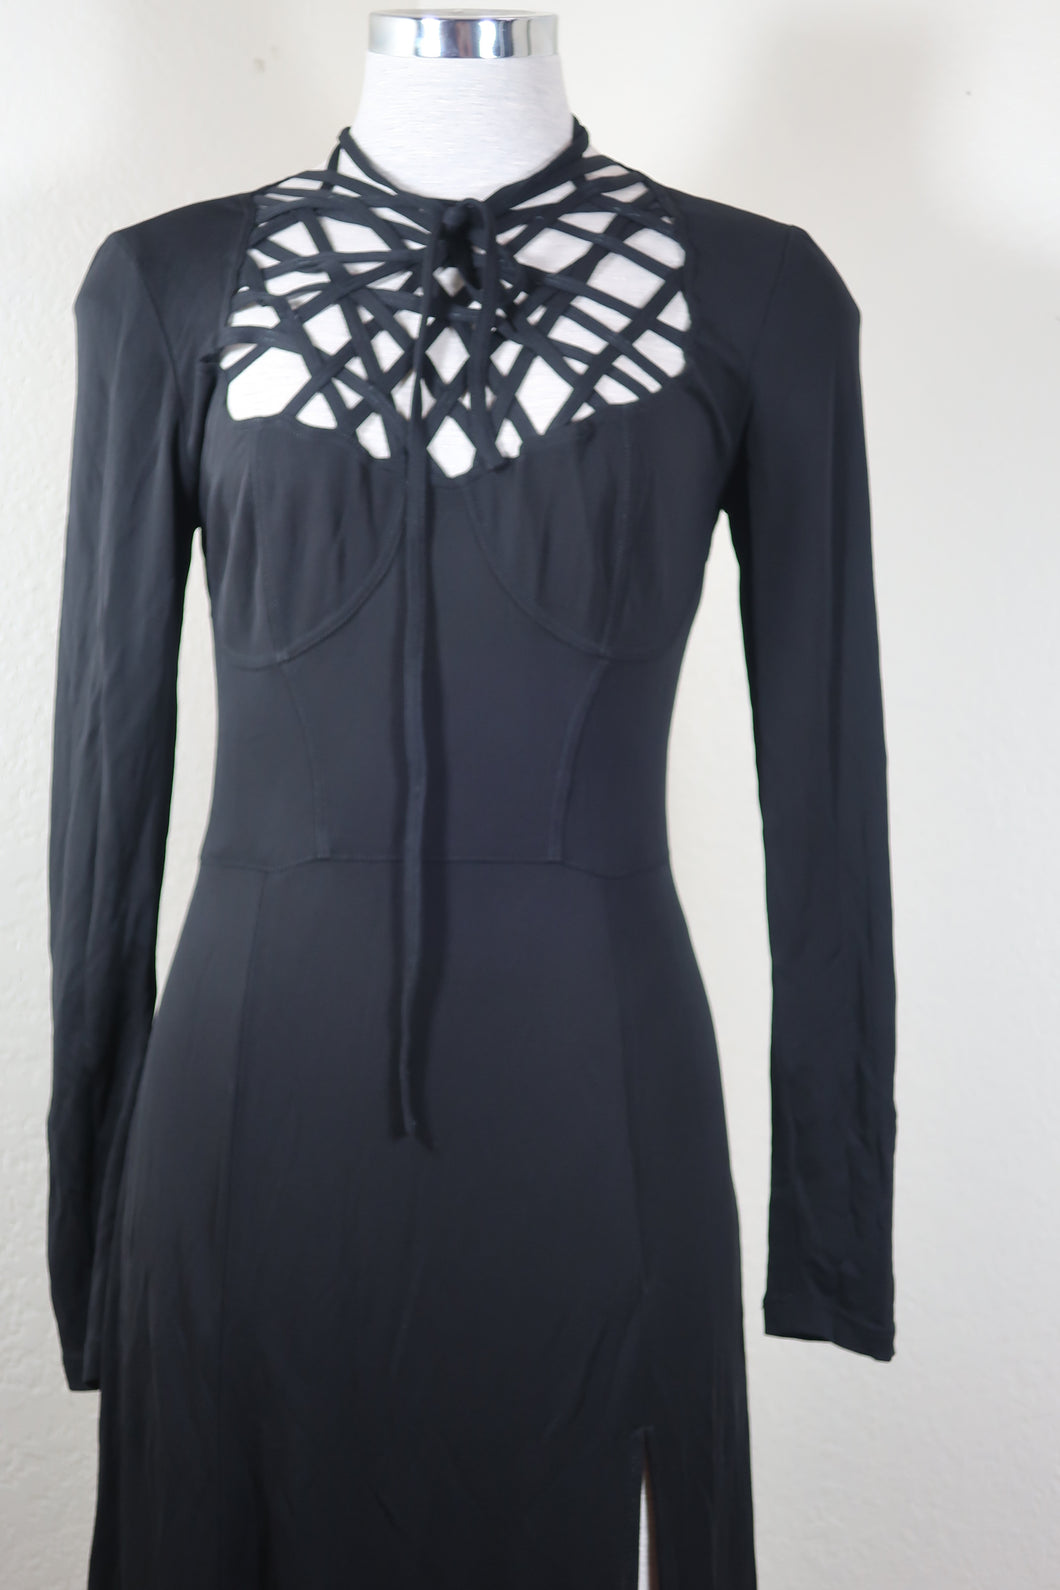 Vintage LOLITA LEMPICKA Black Evening Long Gown Dress Side Slit S M 5 6 Small